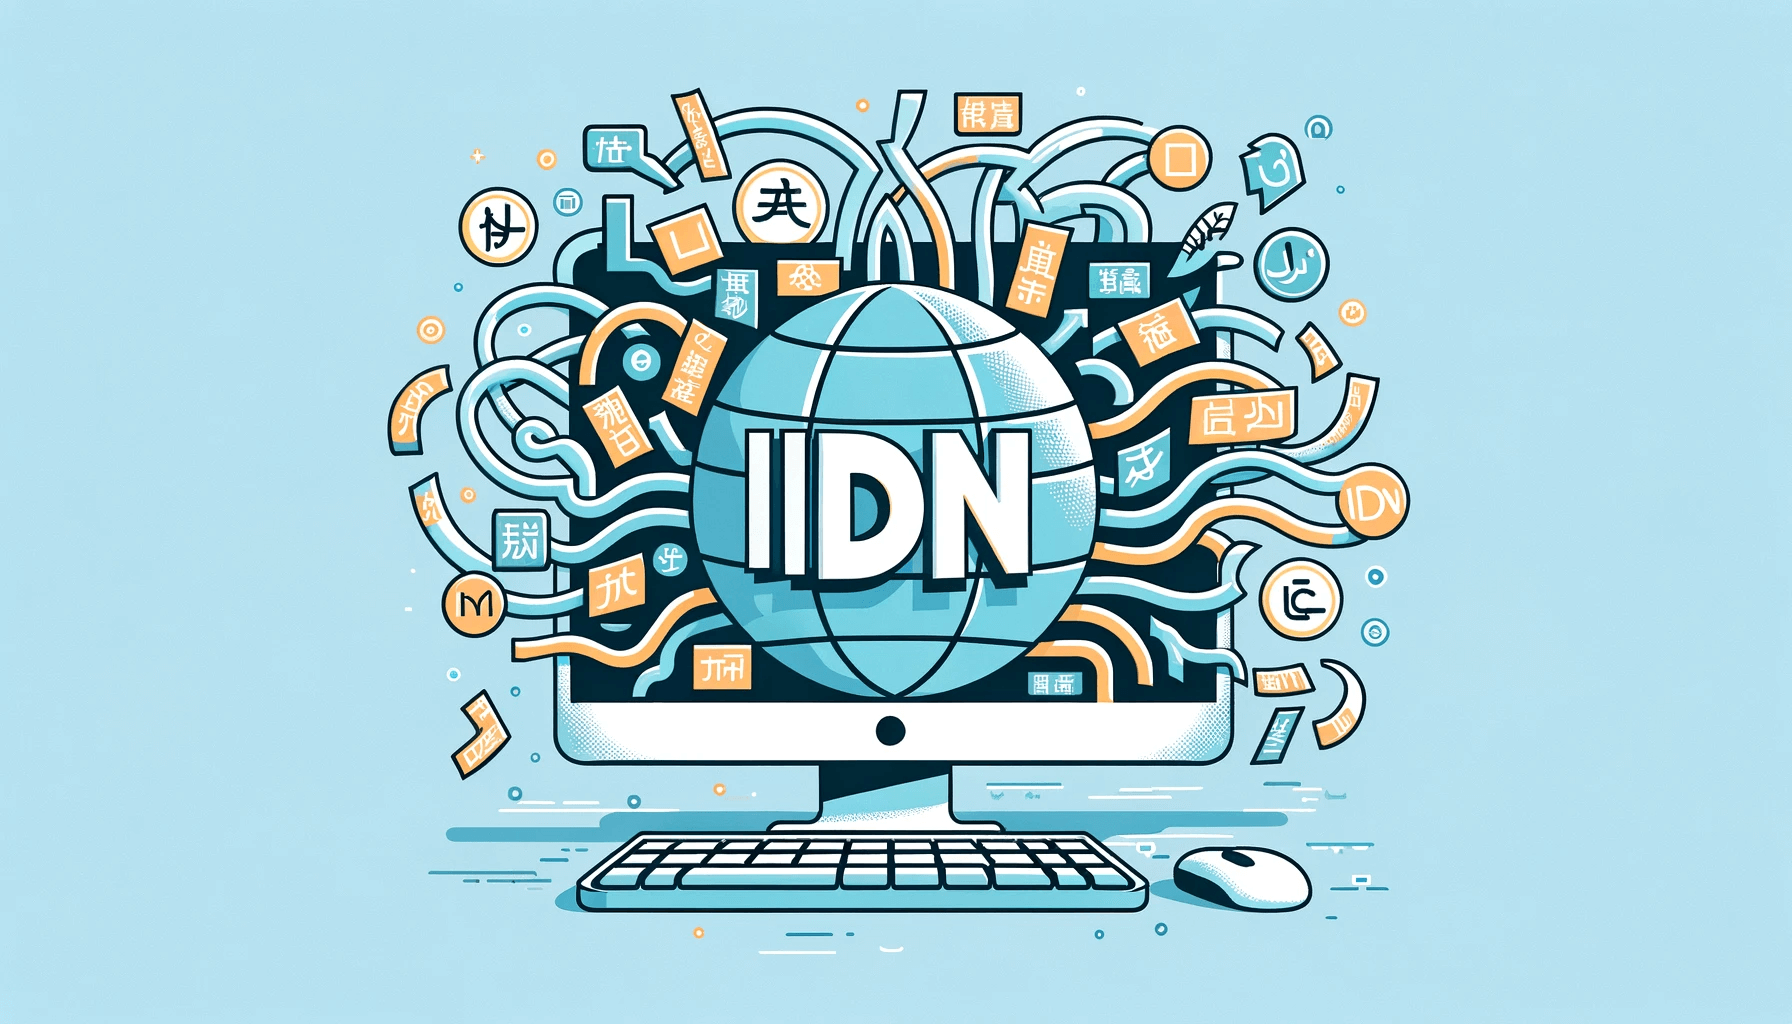 IDN Domains